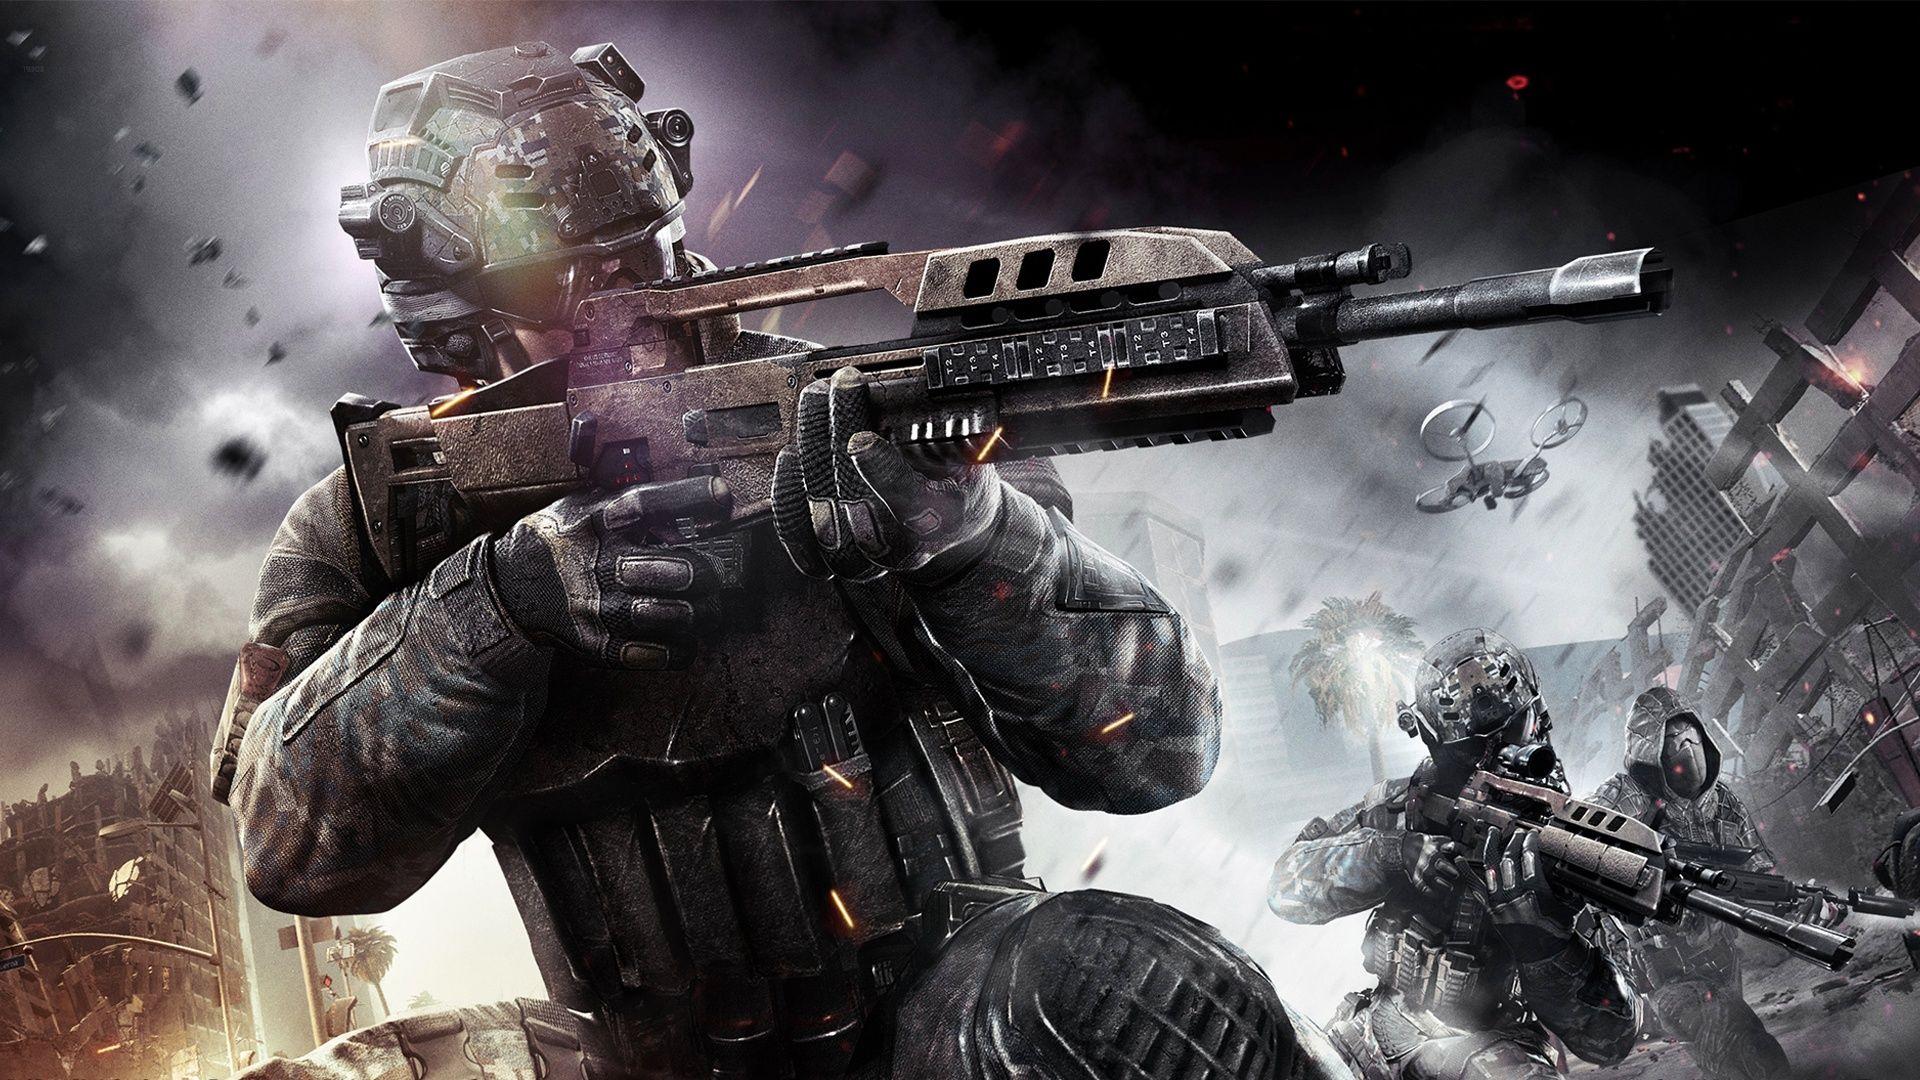 Call of Duty Black Ops 2 Video Game Wallpaper in jpg format